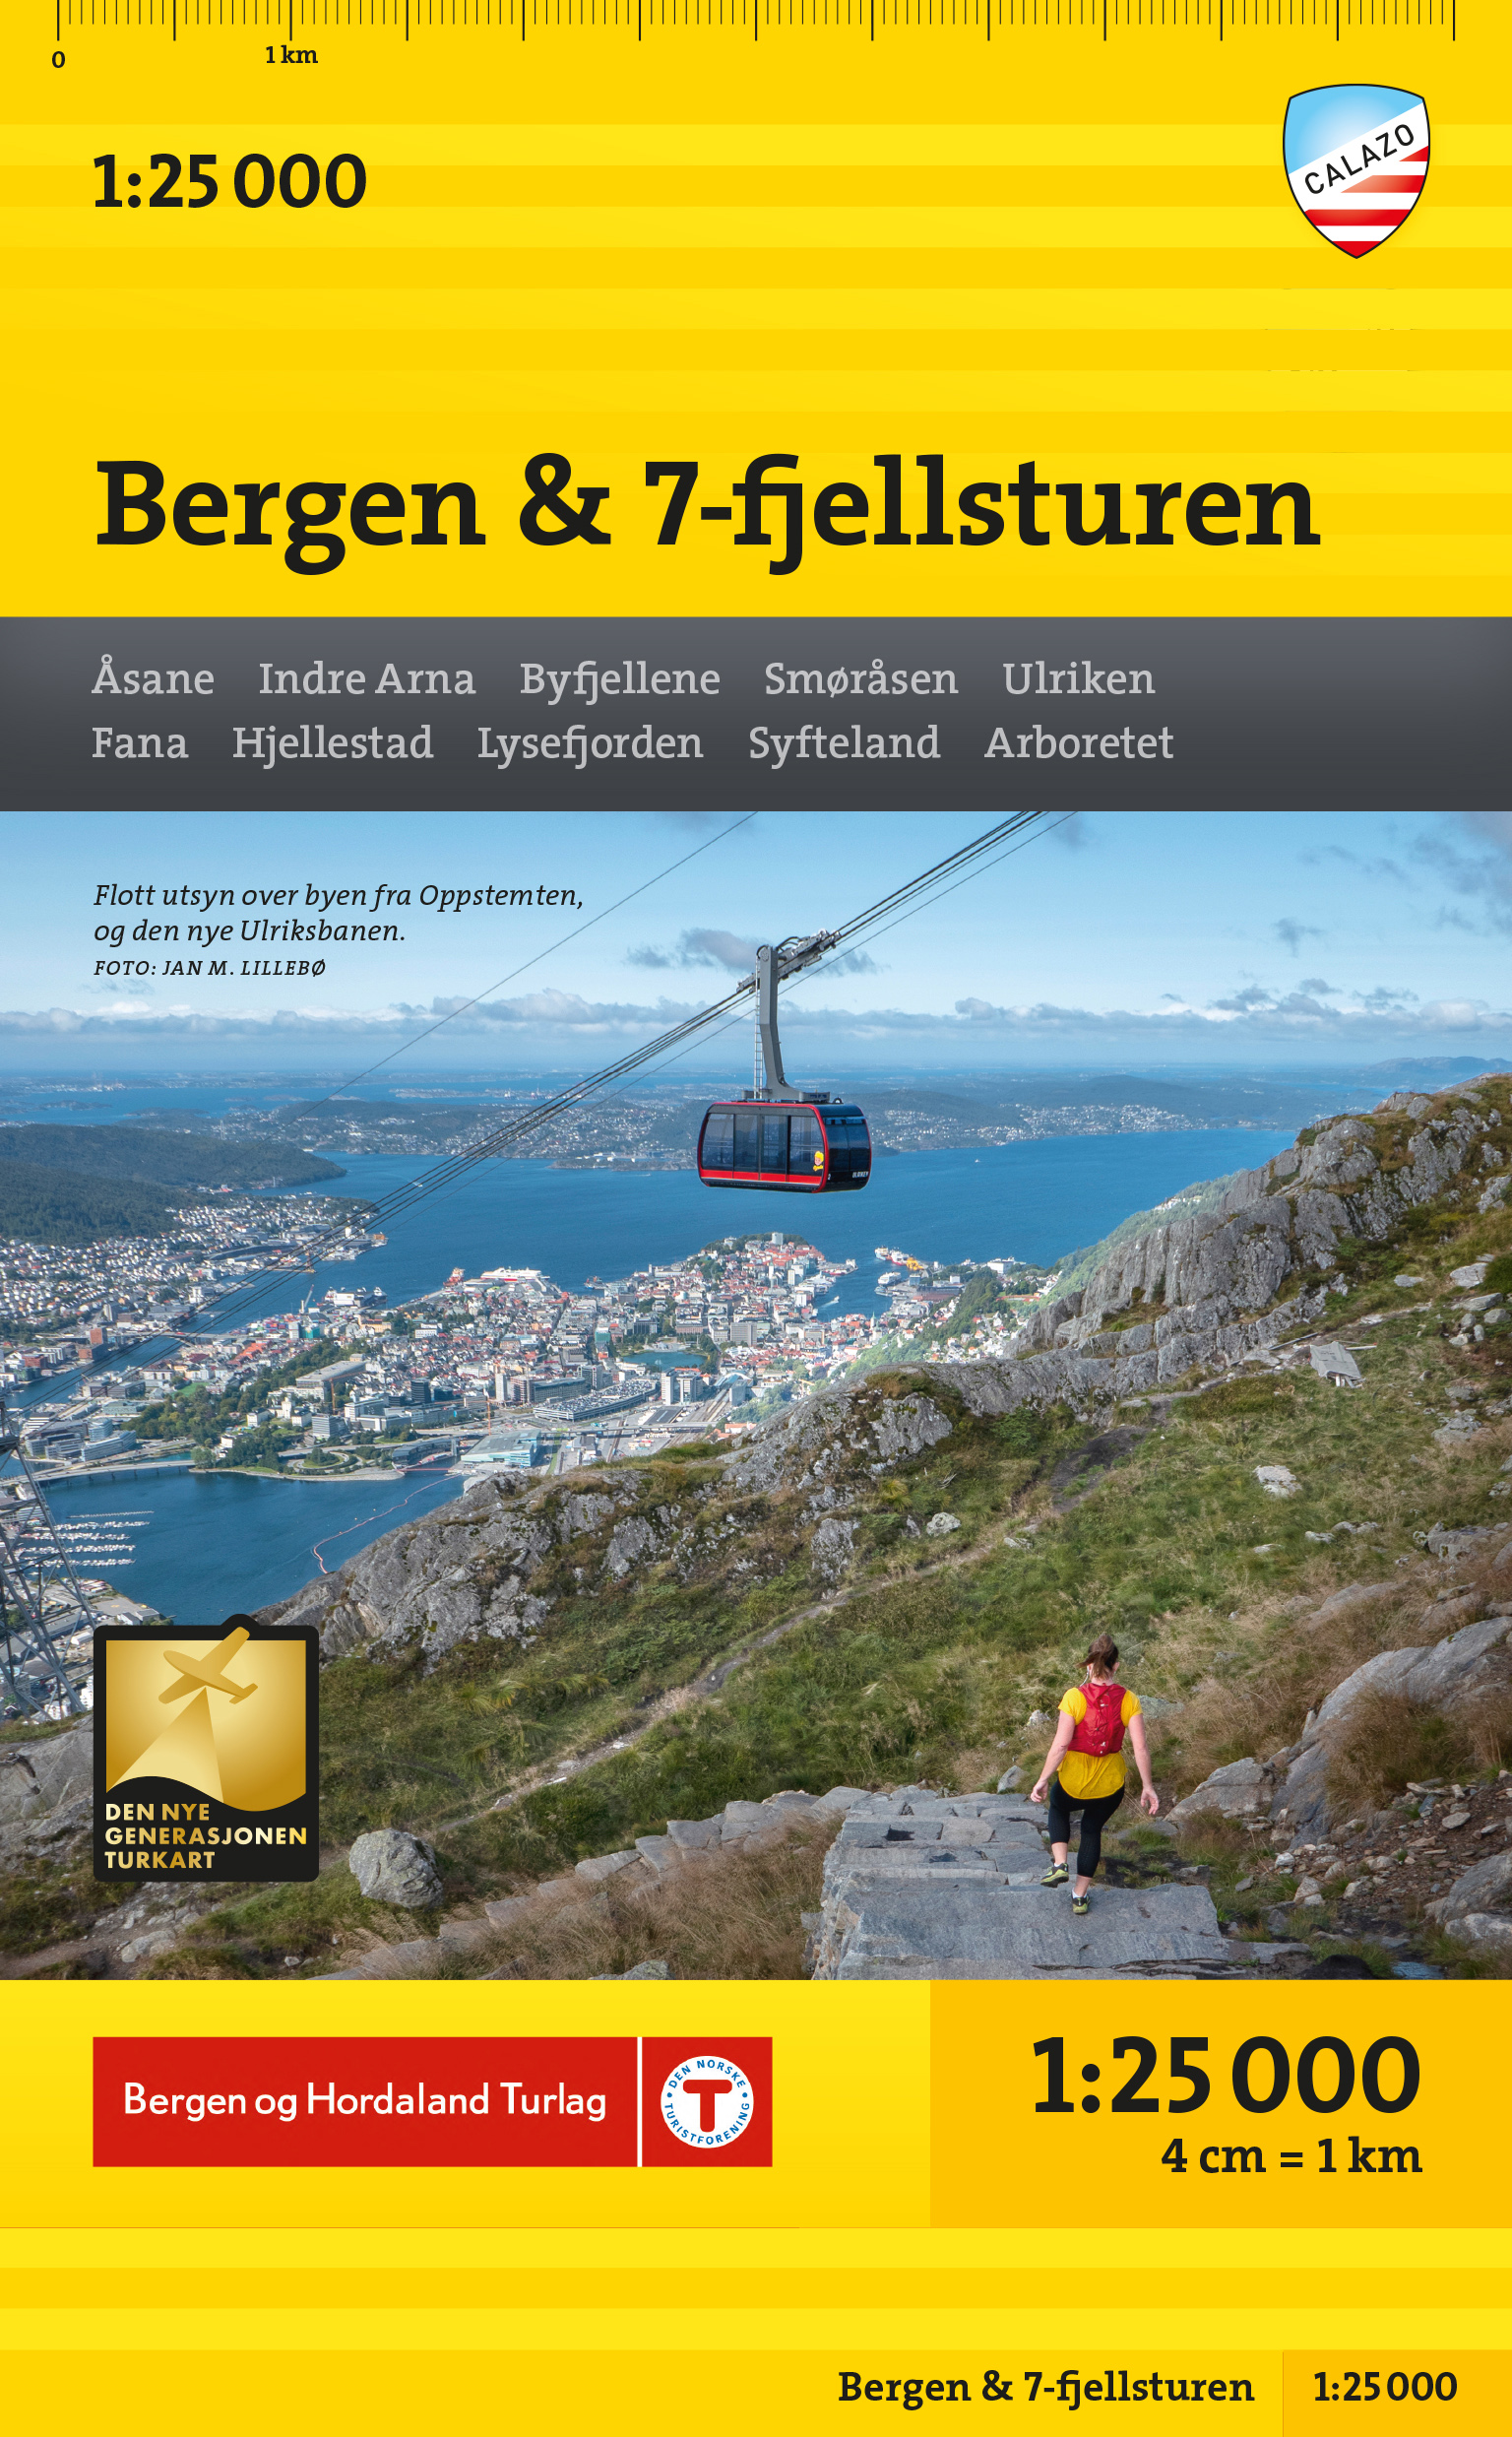 Bergen & 7-fjellsturen - Stikart